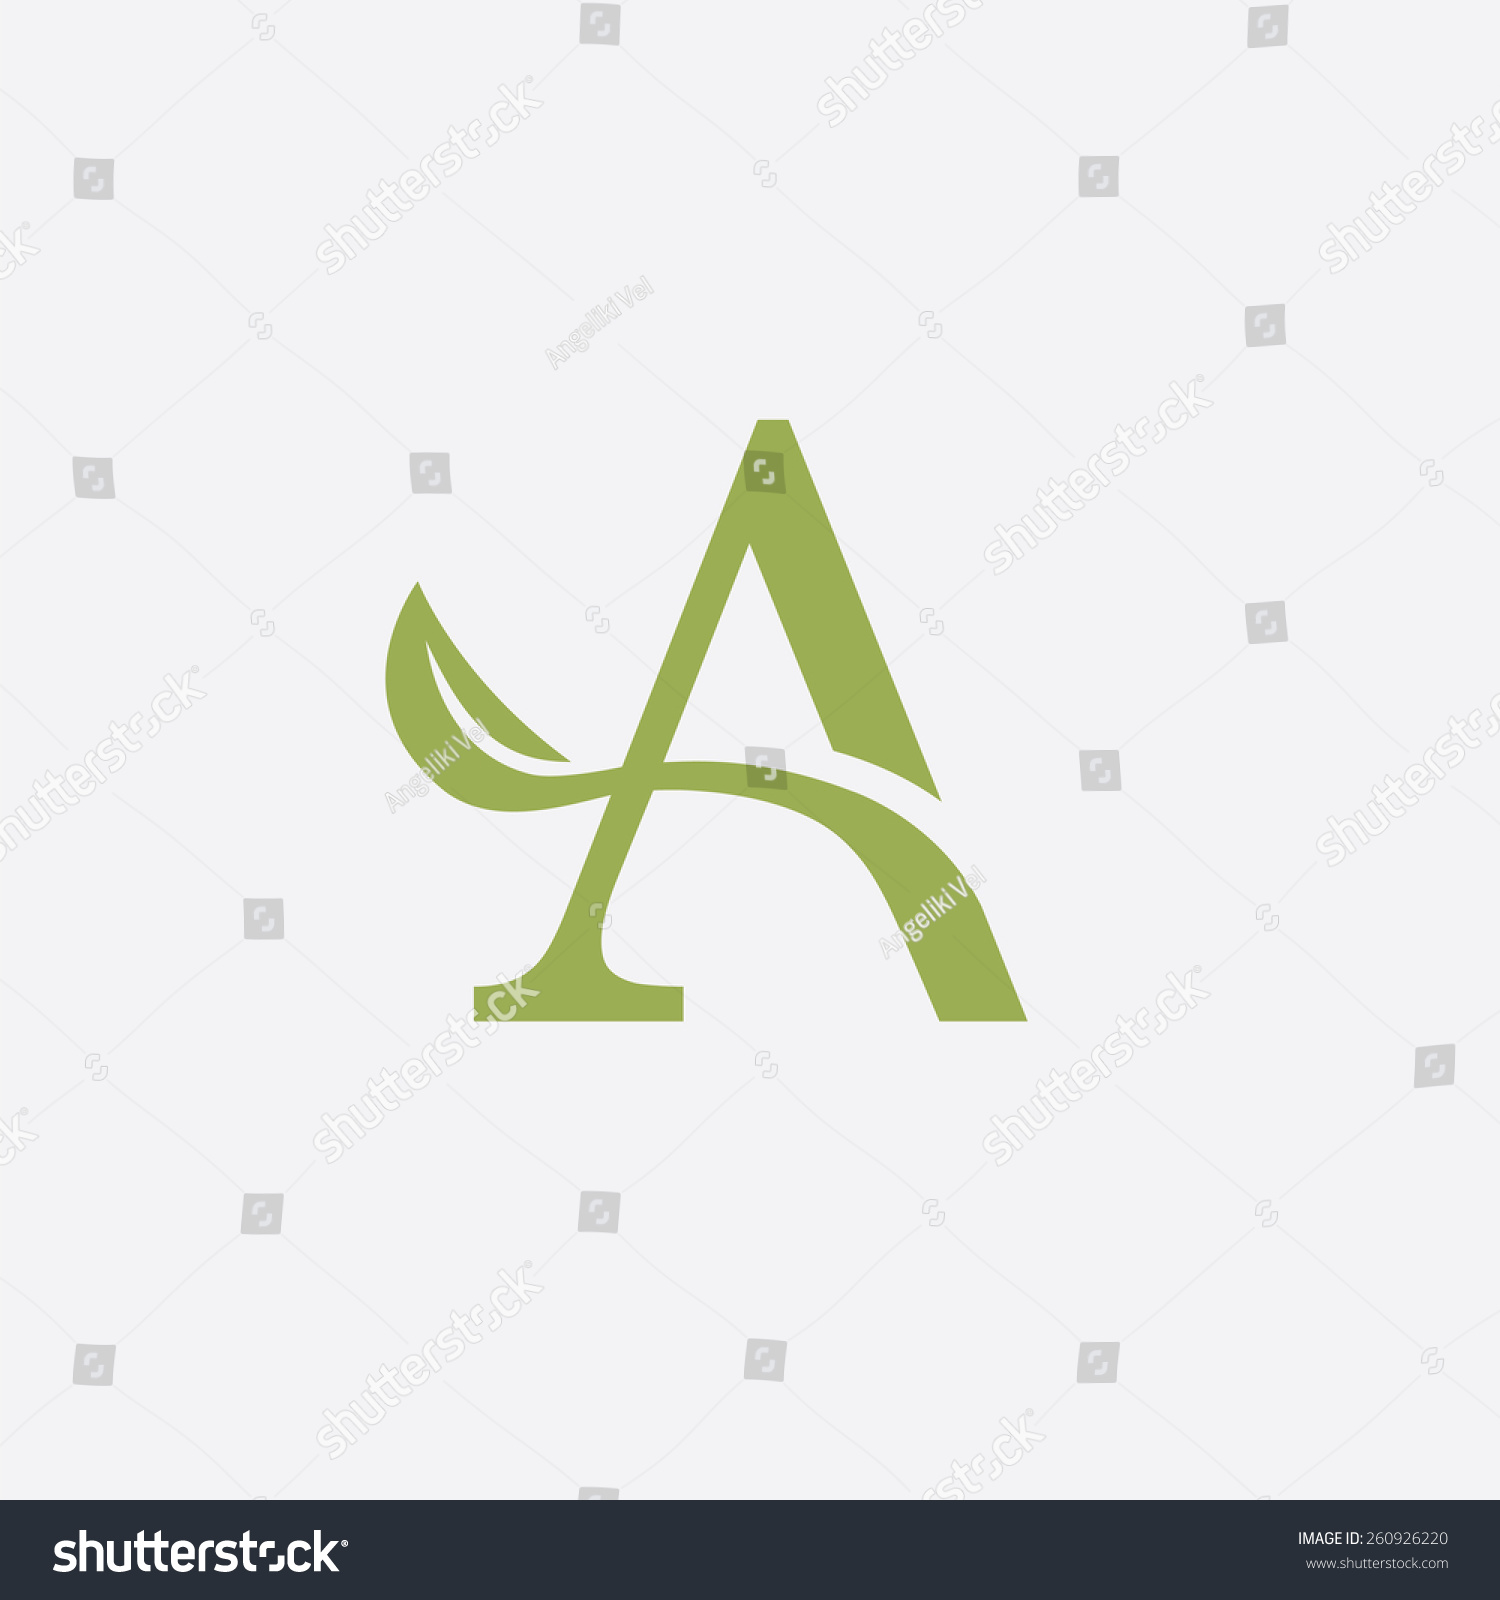 Letter A Logo / Symbol - Vector Icon - 260926220 : Shutterstock